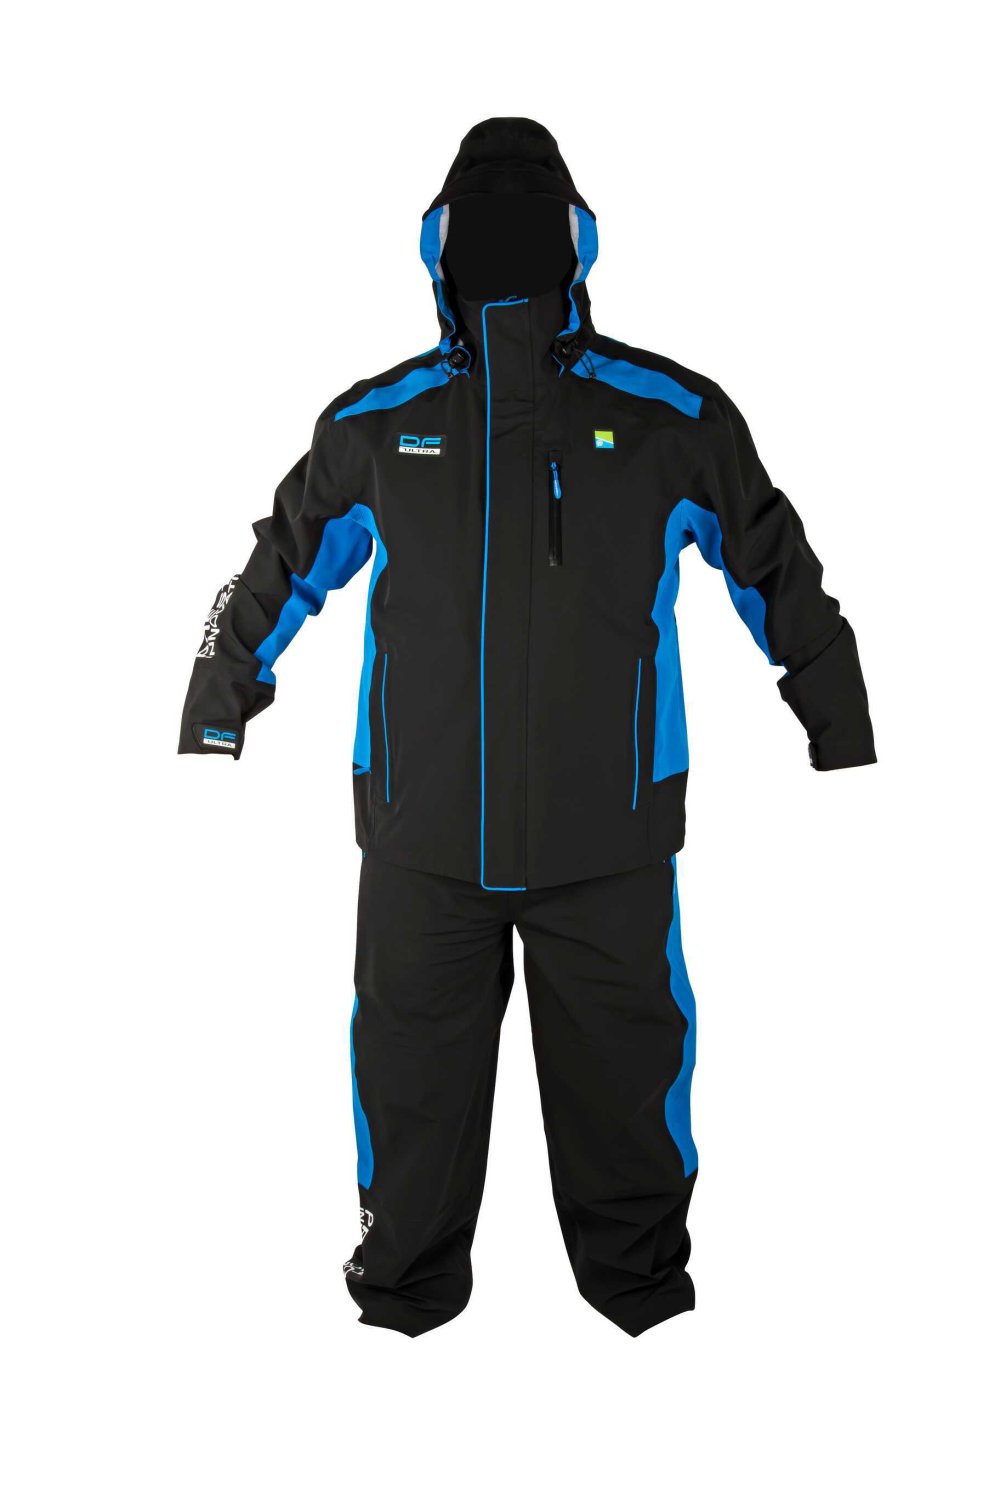 SNECI - Horgász webshop és horgászbolt - DF Ultra Suit - Large